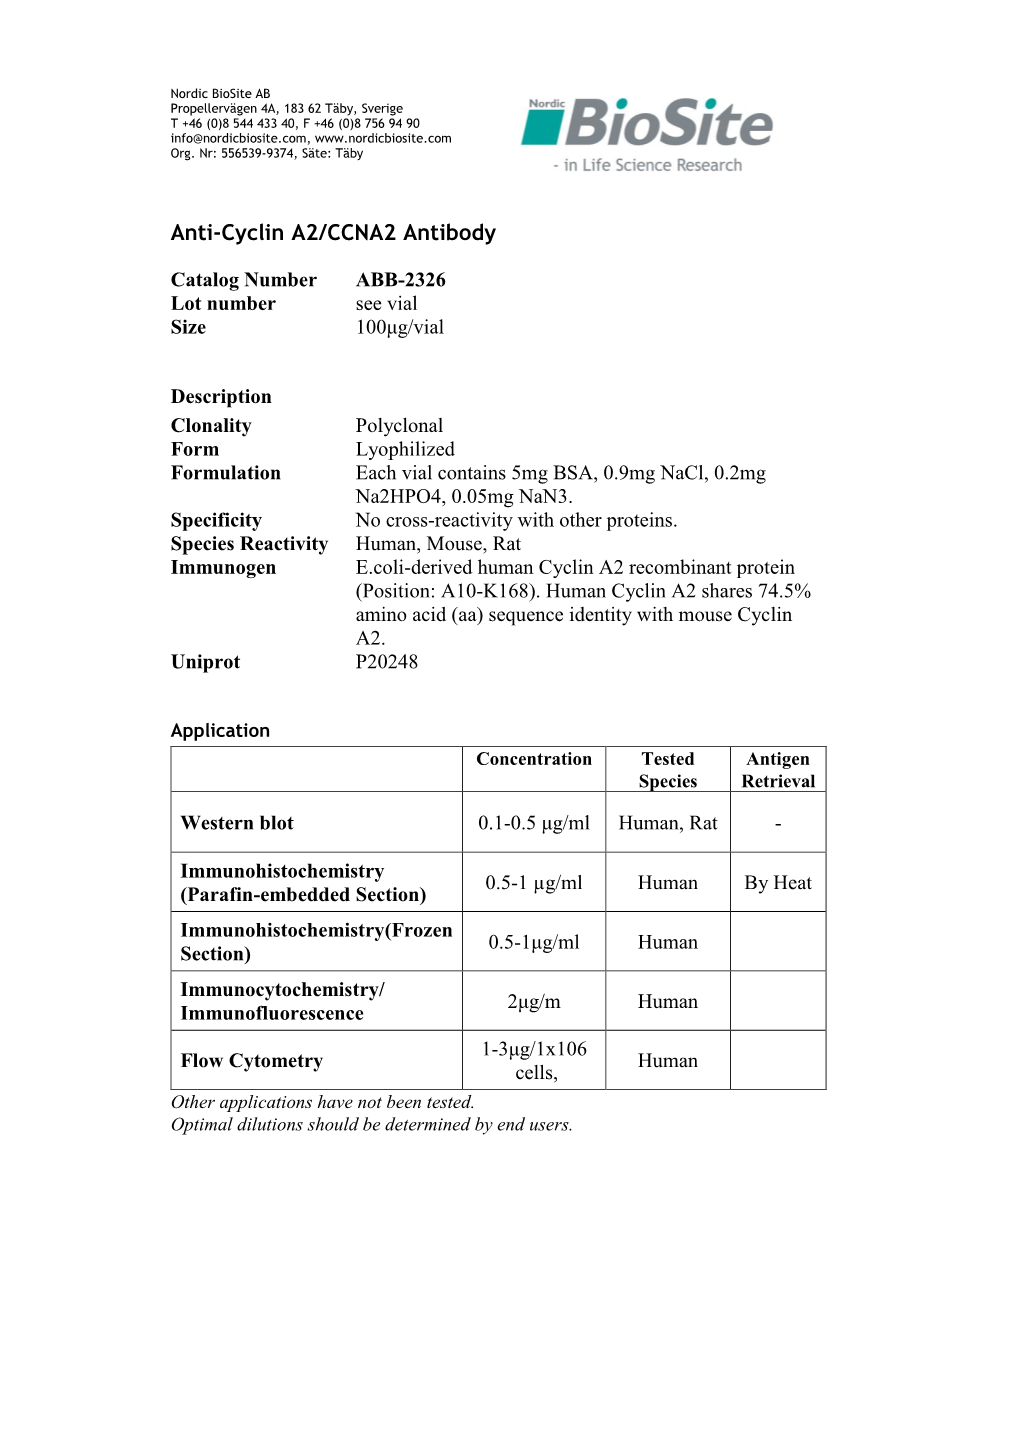 Anti-Cyclin A2/CCNA2 Antibody